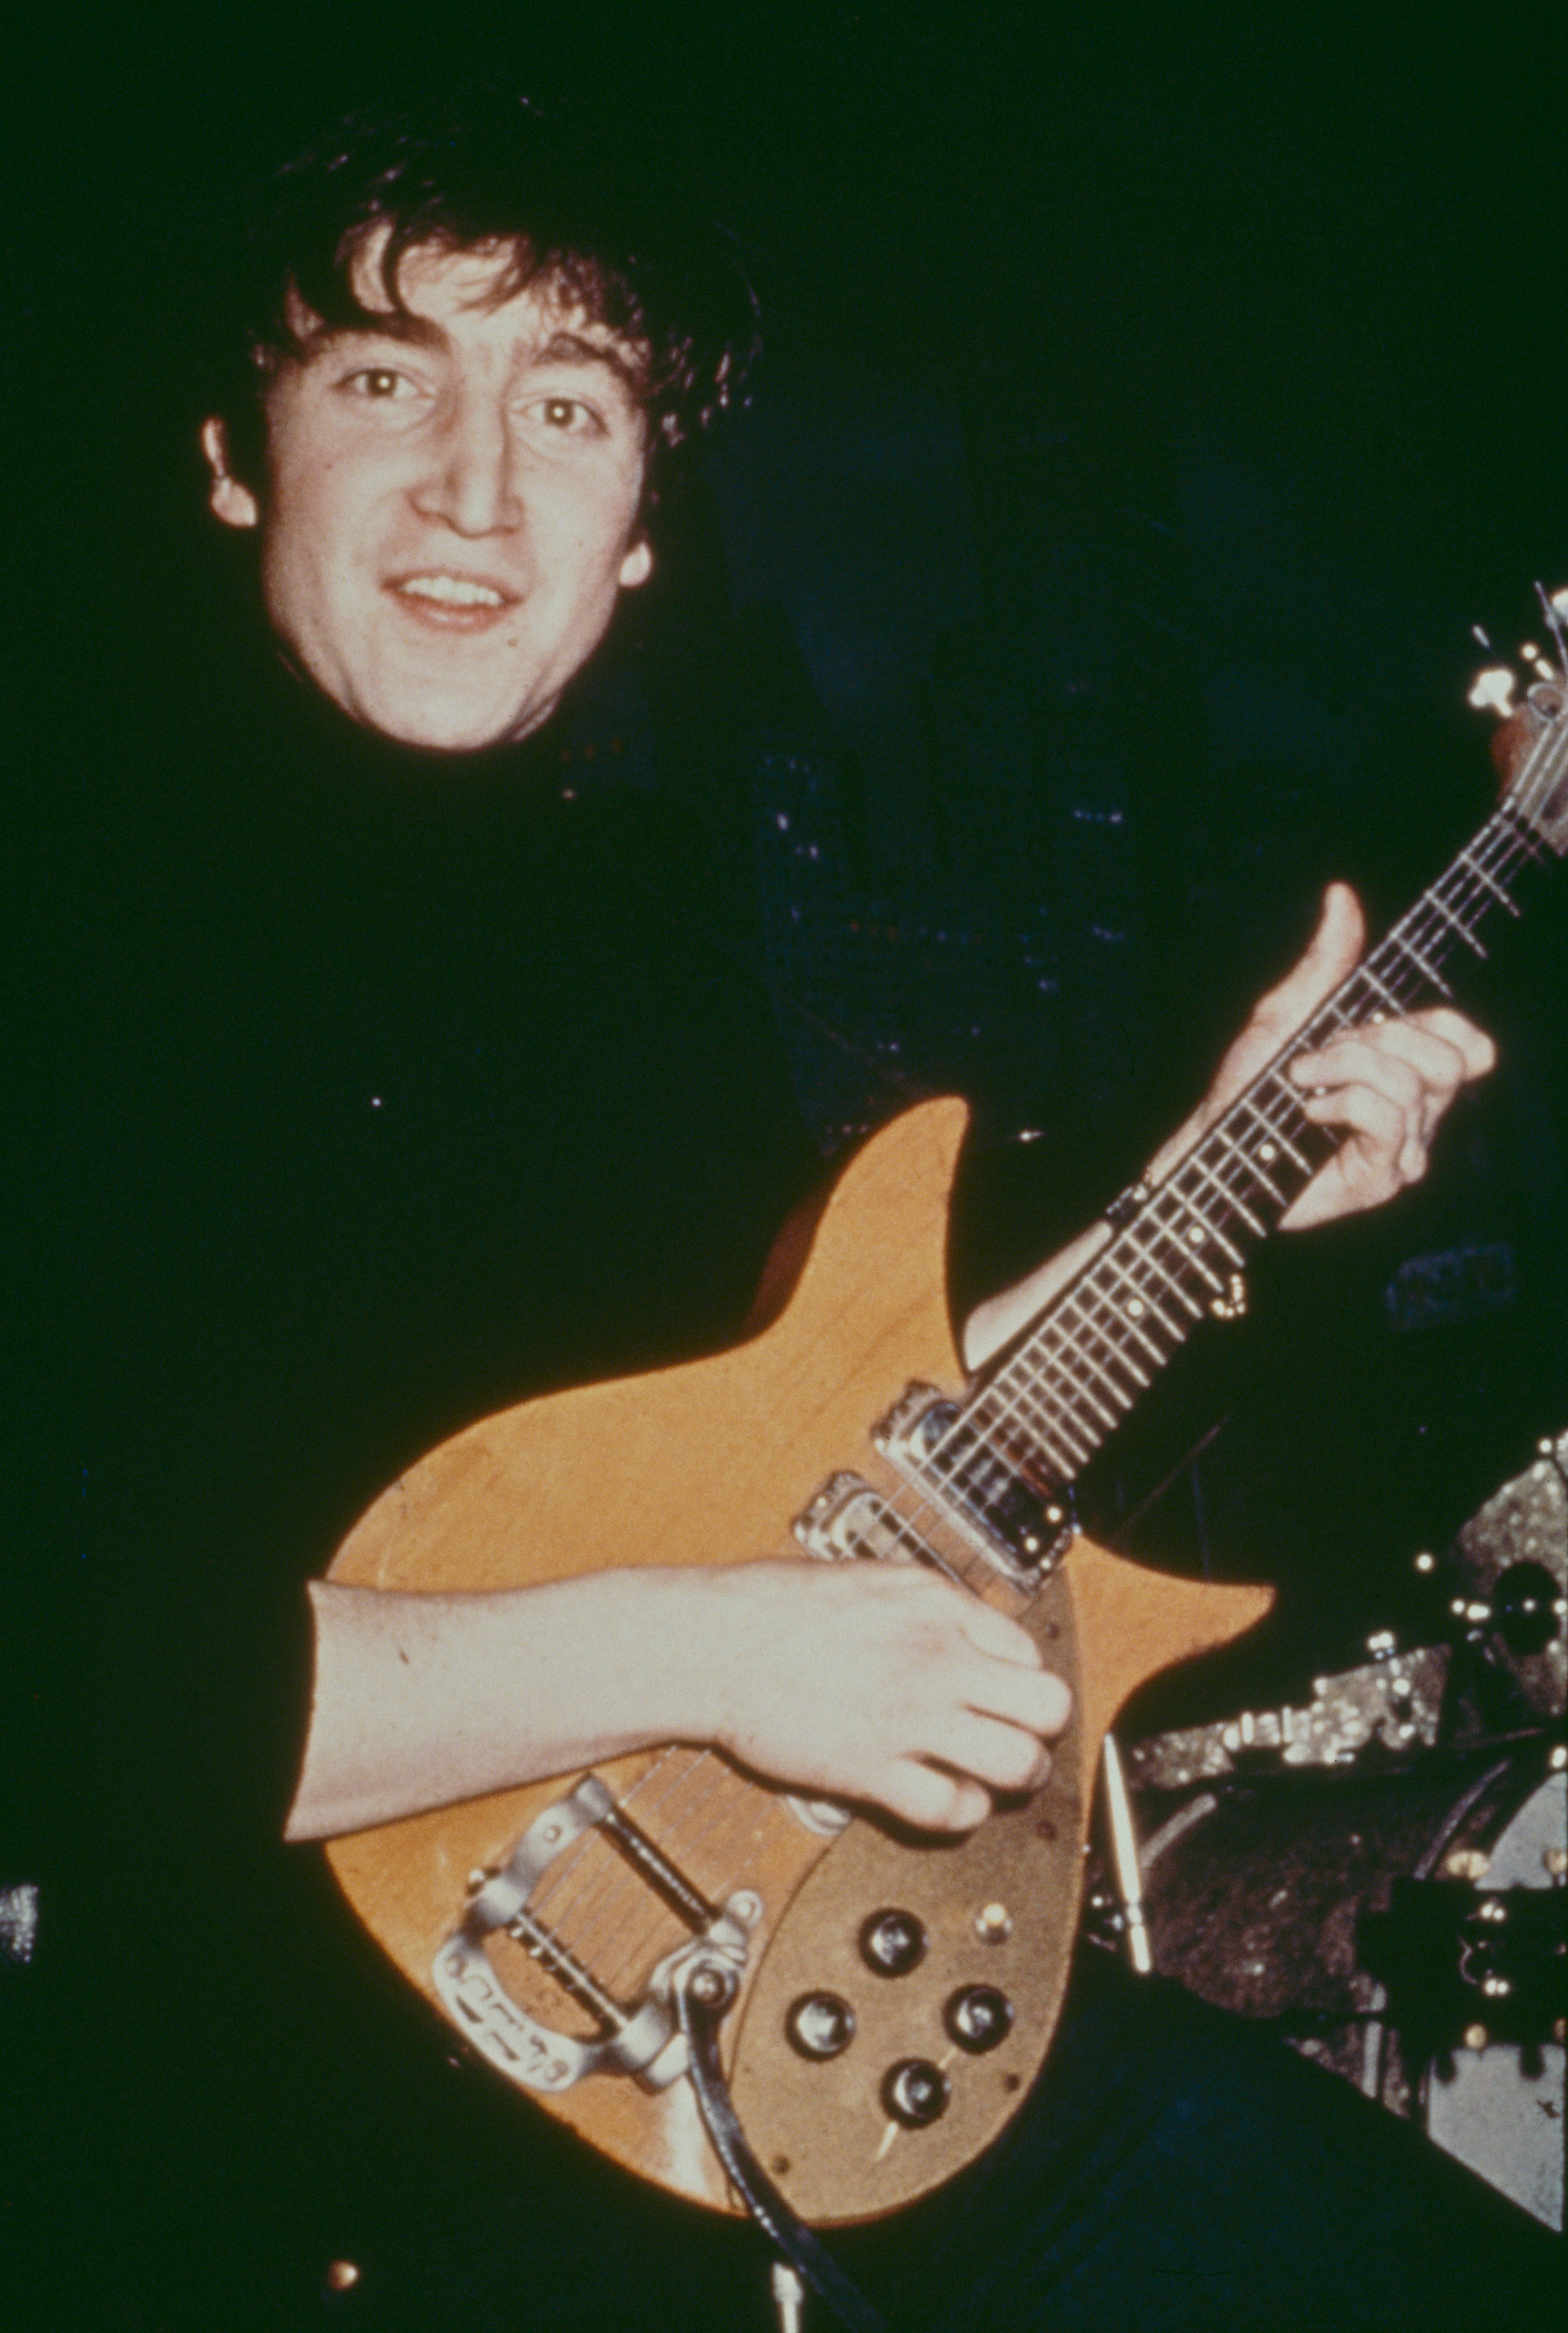 John Lennon performing with The Beatles at the Star Club, Hamburg, April-May 1962.